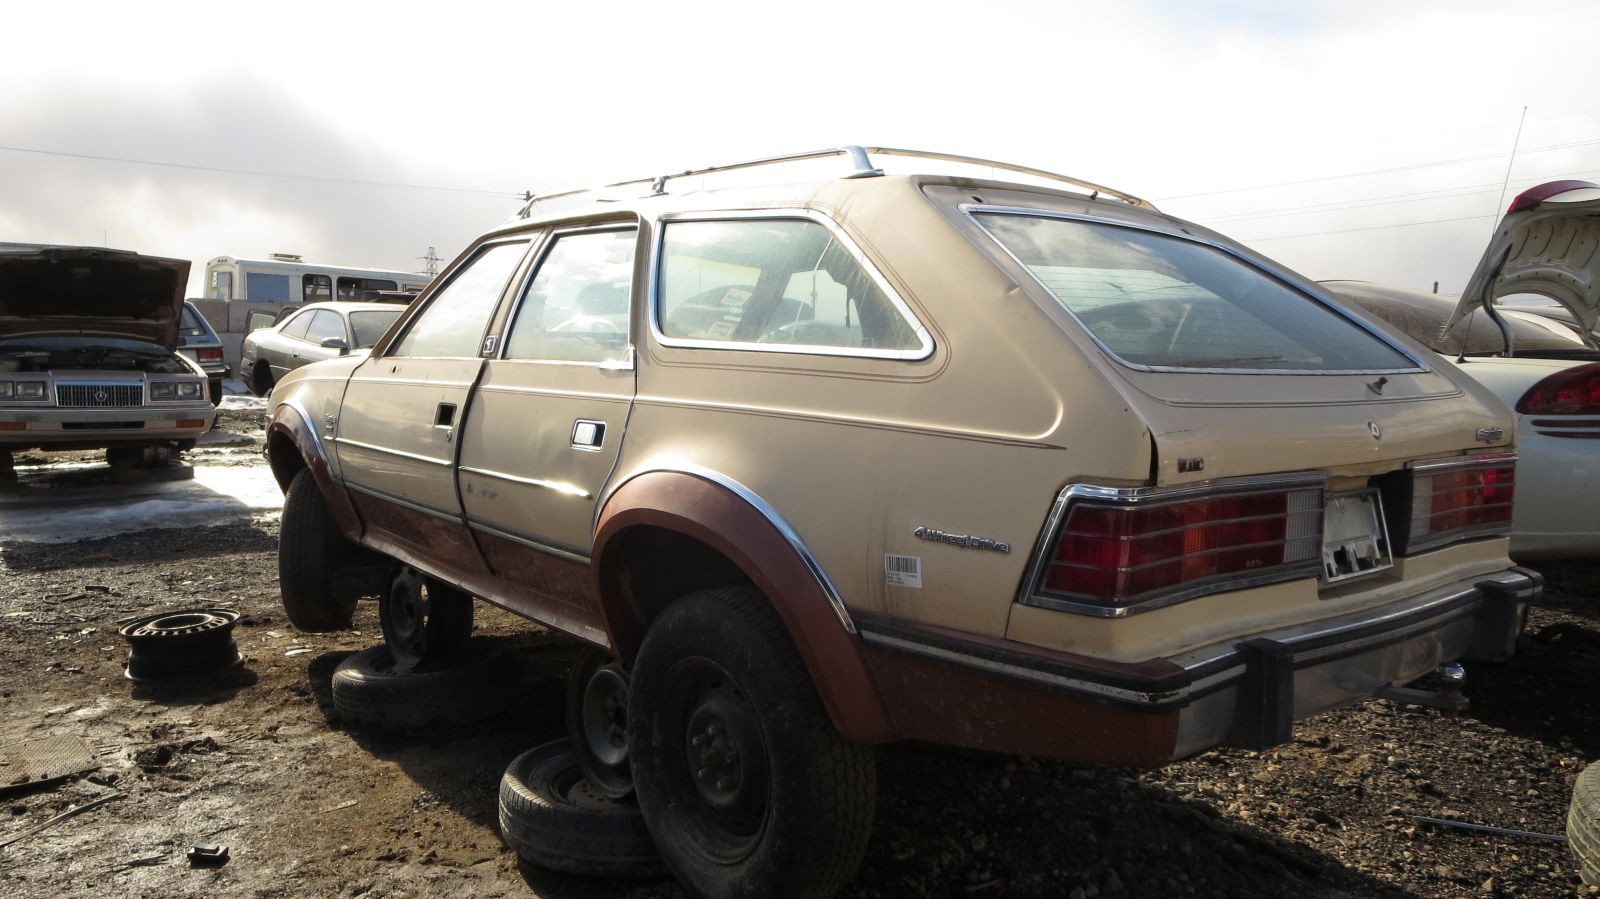 06 - 1982 AMC Eagle wagon in Colorado junkyard - photo by Murilee Martin